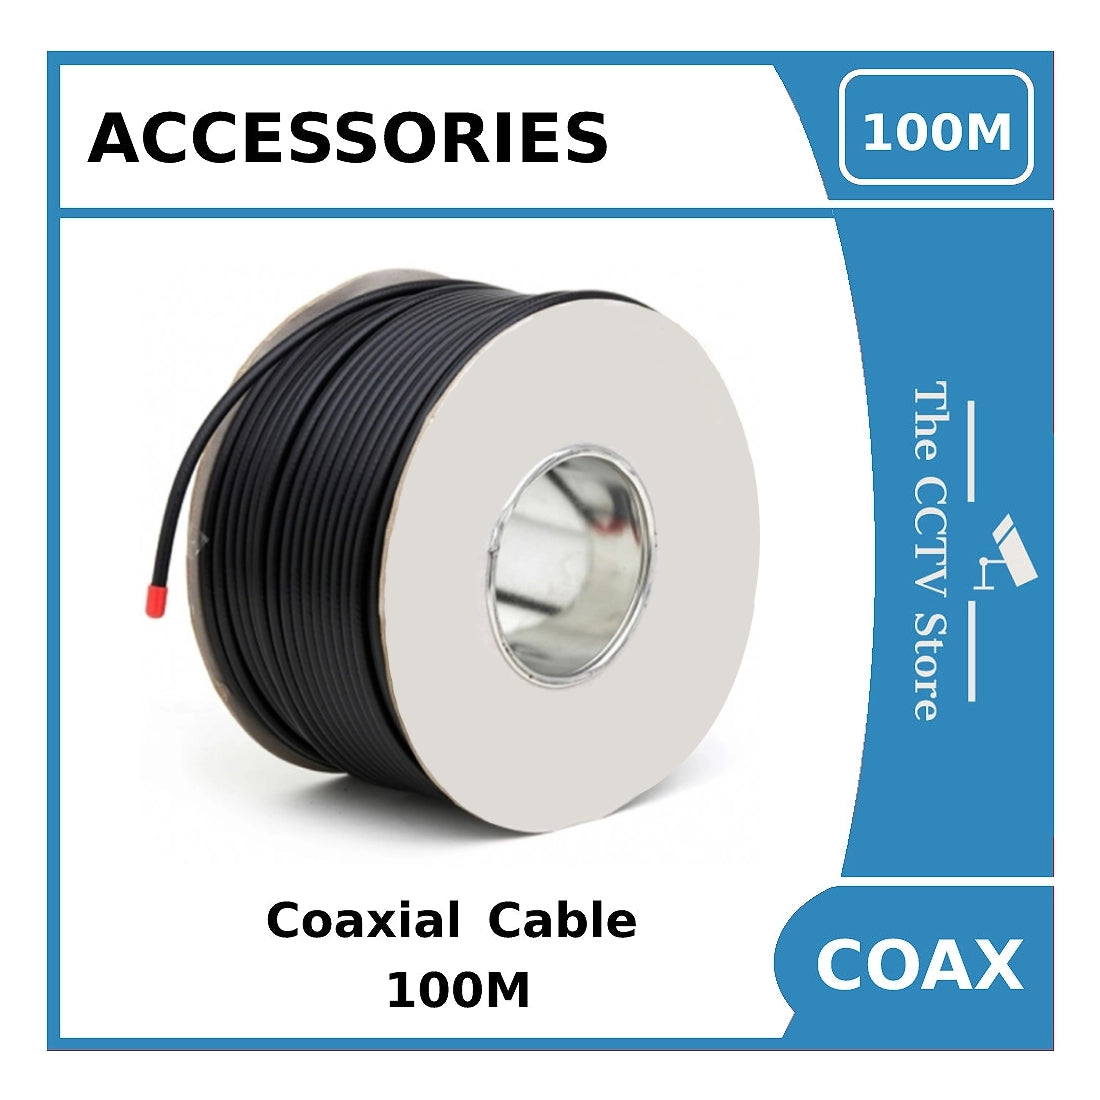 Coaxial RG59 External Grade CCTV Coaxial / BNC Cable - 100mCoaxial RG59 External Grade Coaxial / BNC Cable for CCTV Use - 100m